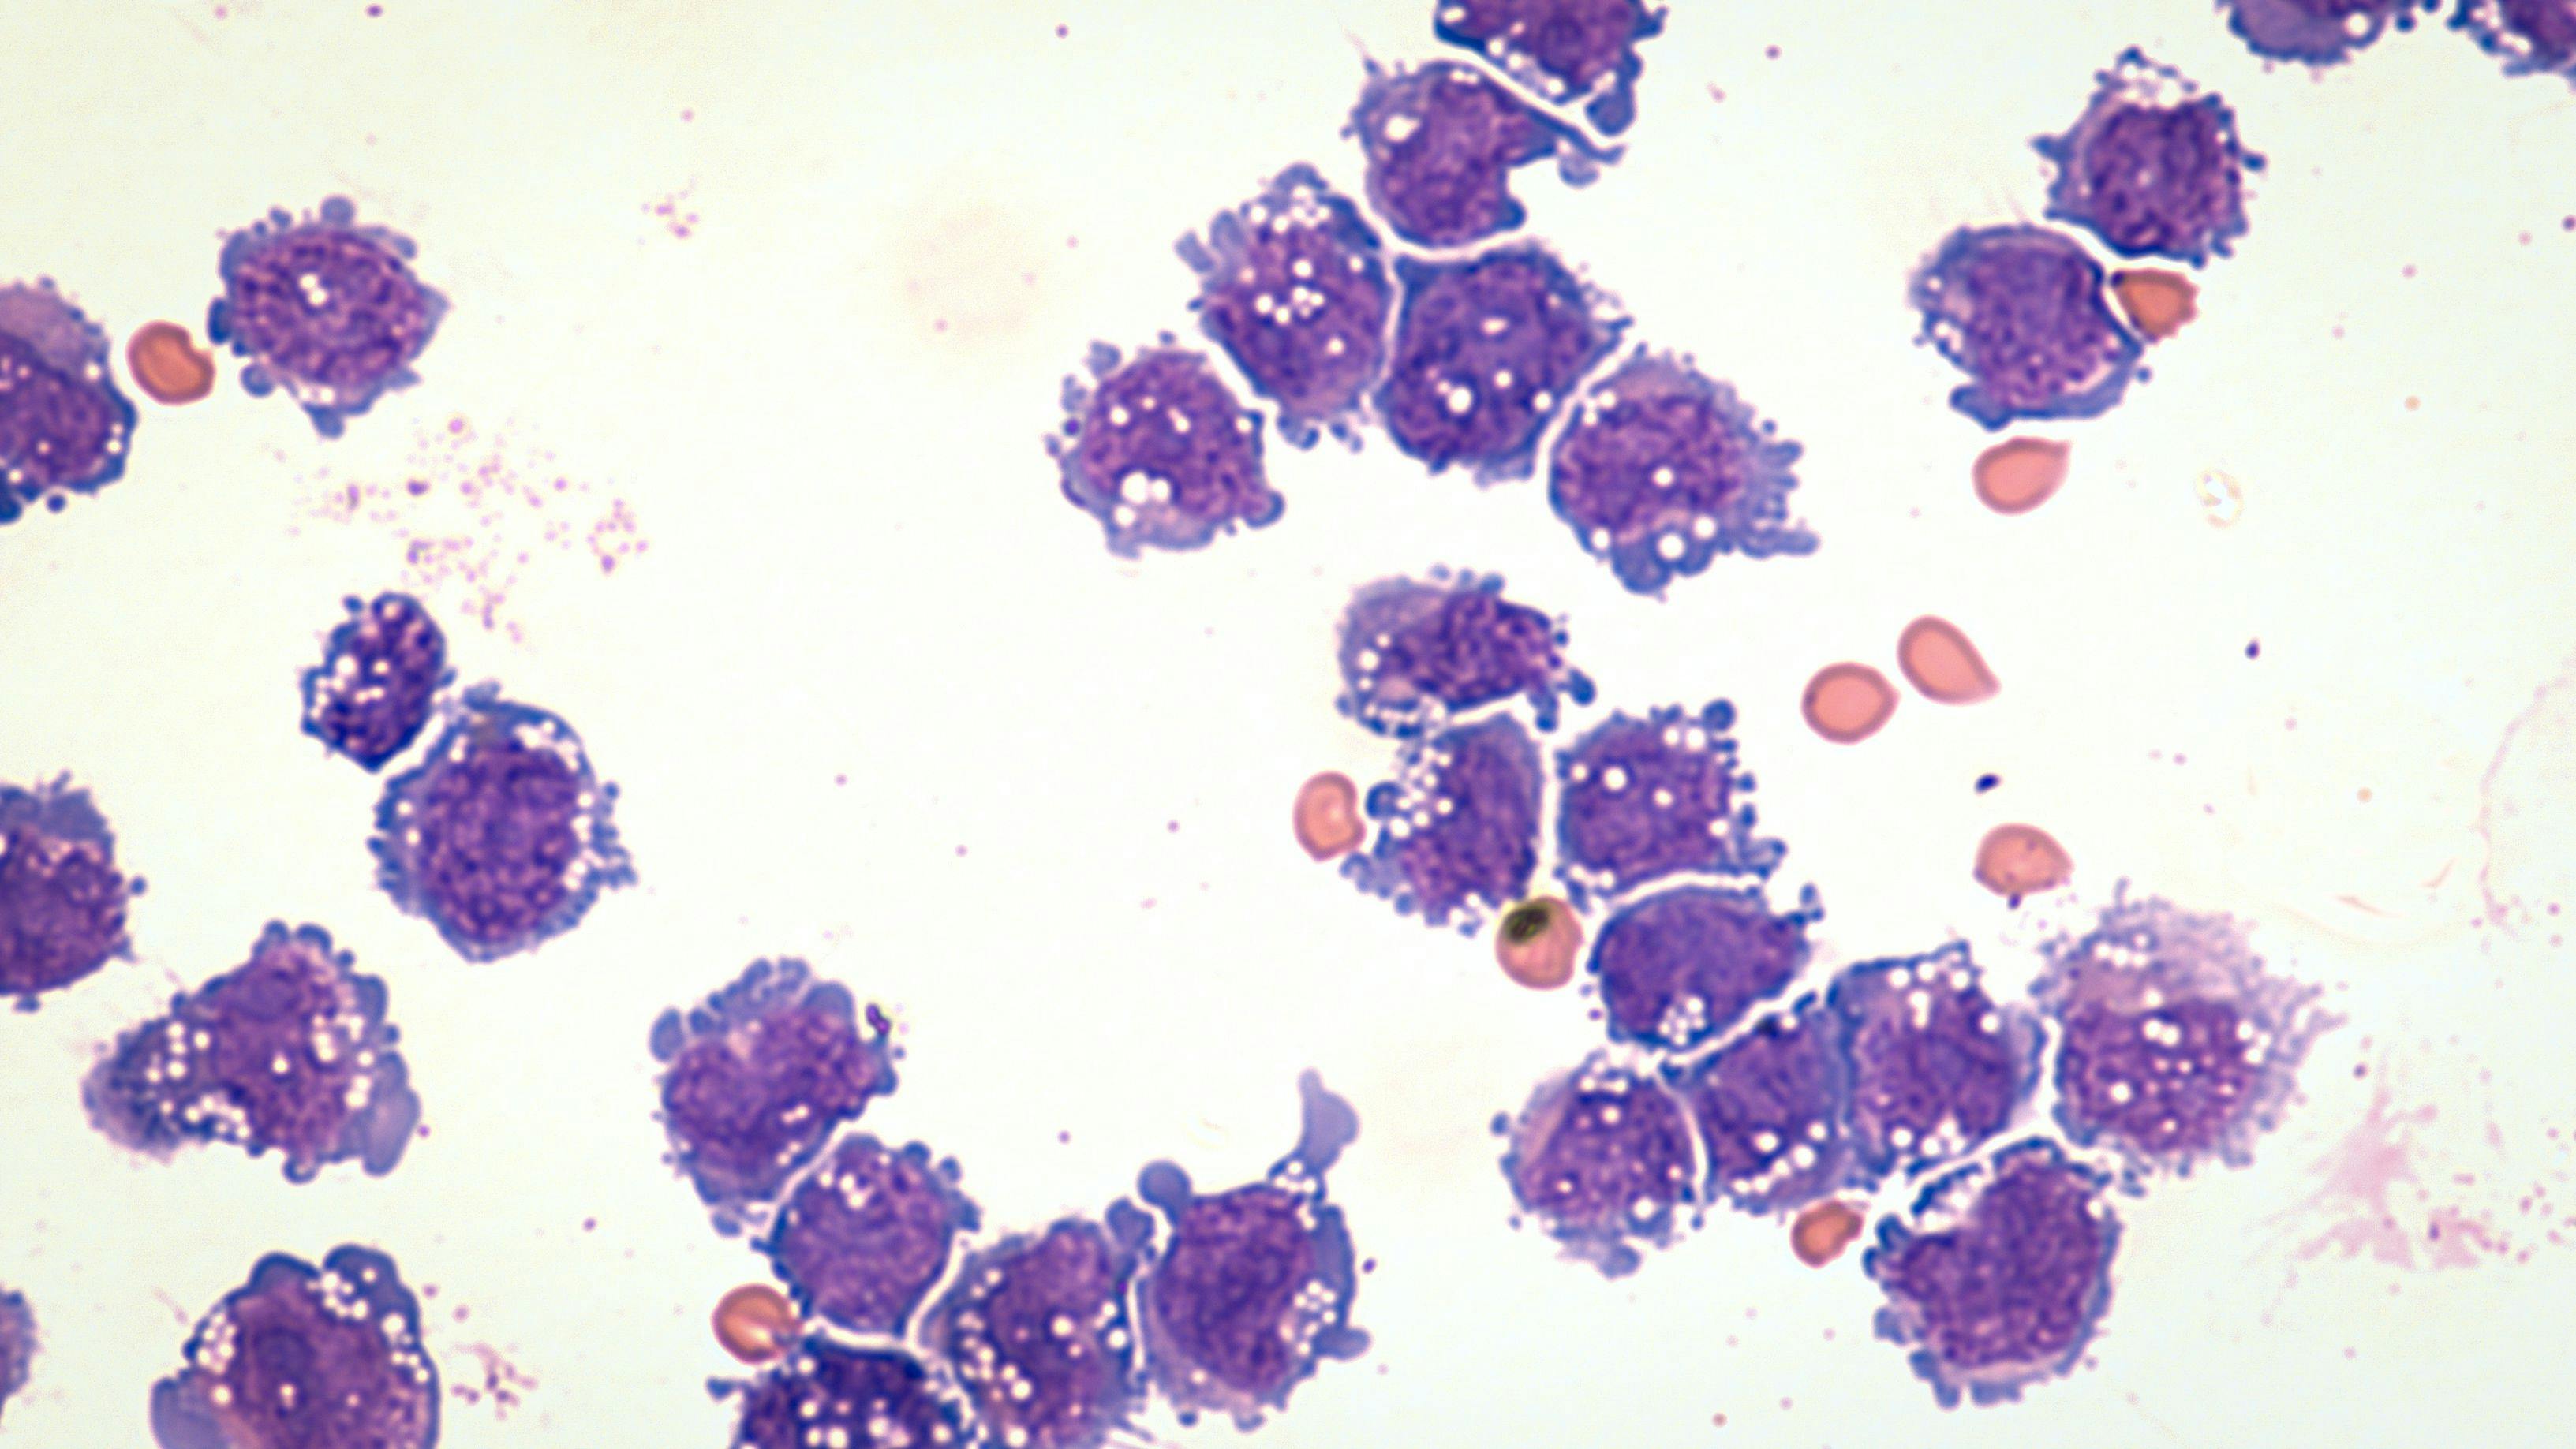 Microscopic image of DLBCL | Image credit: David A. Litman - stock.adobe.com